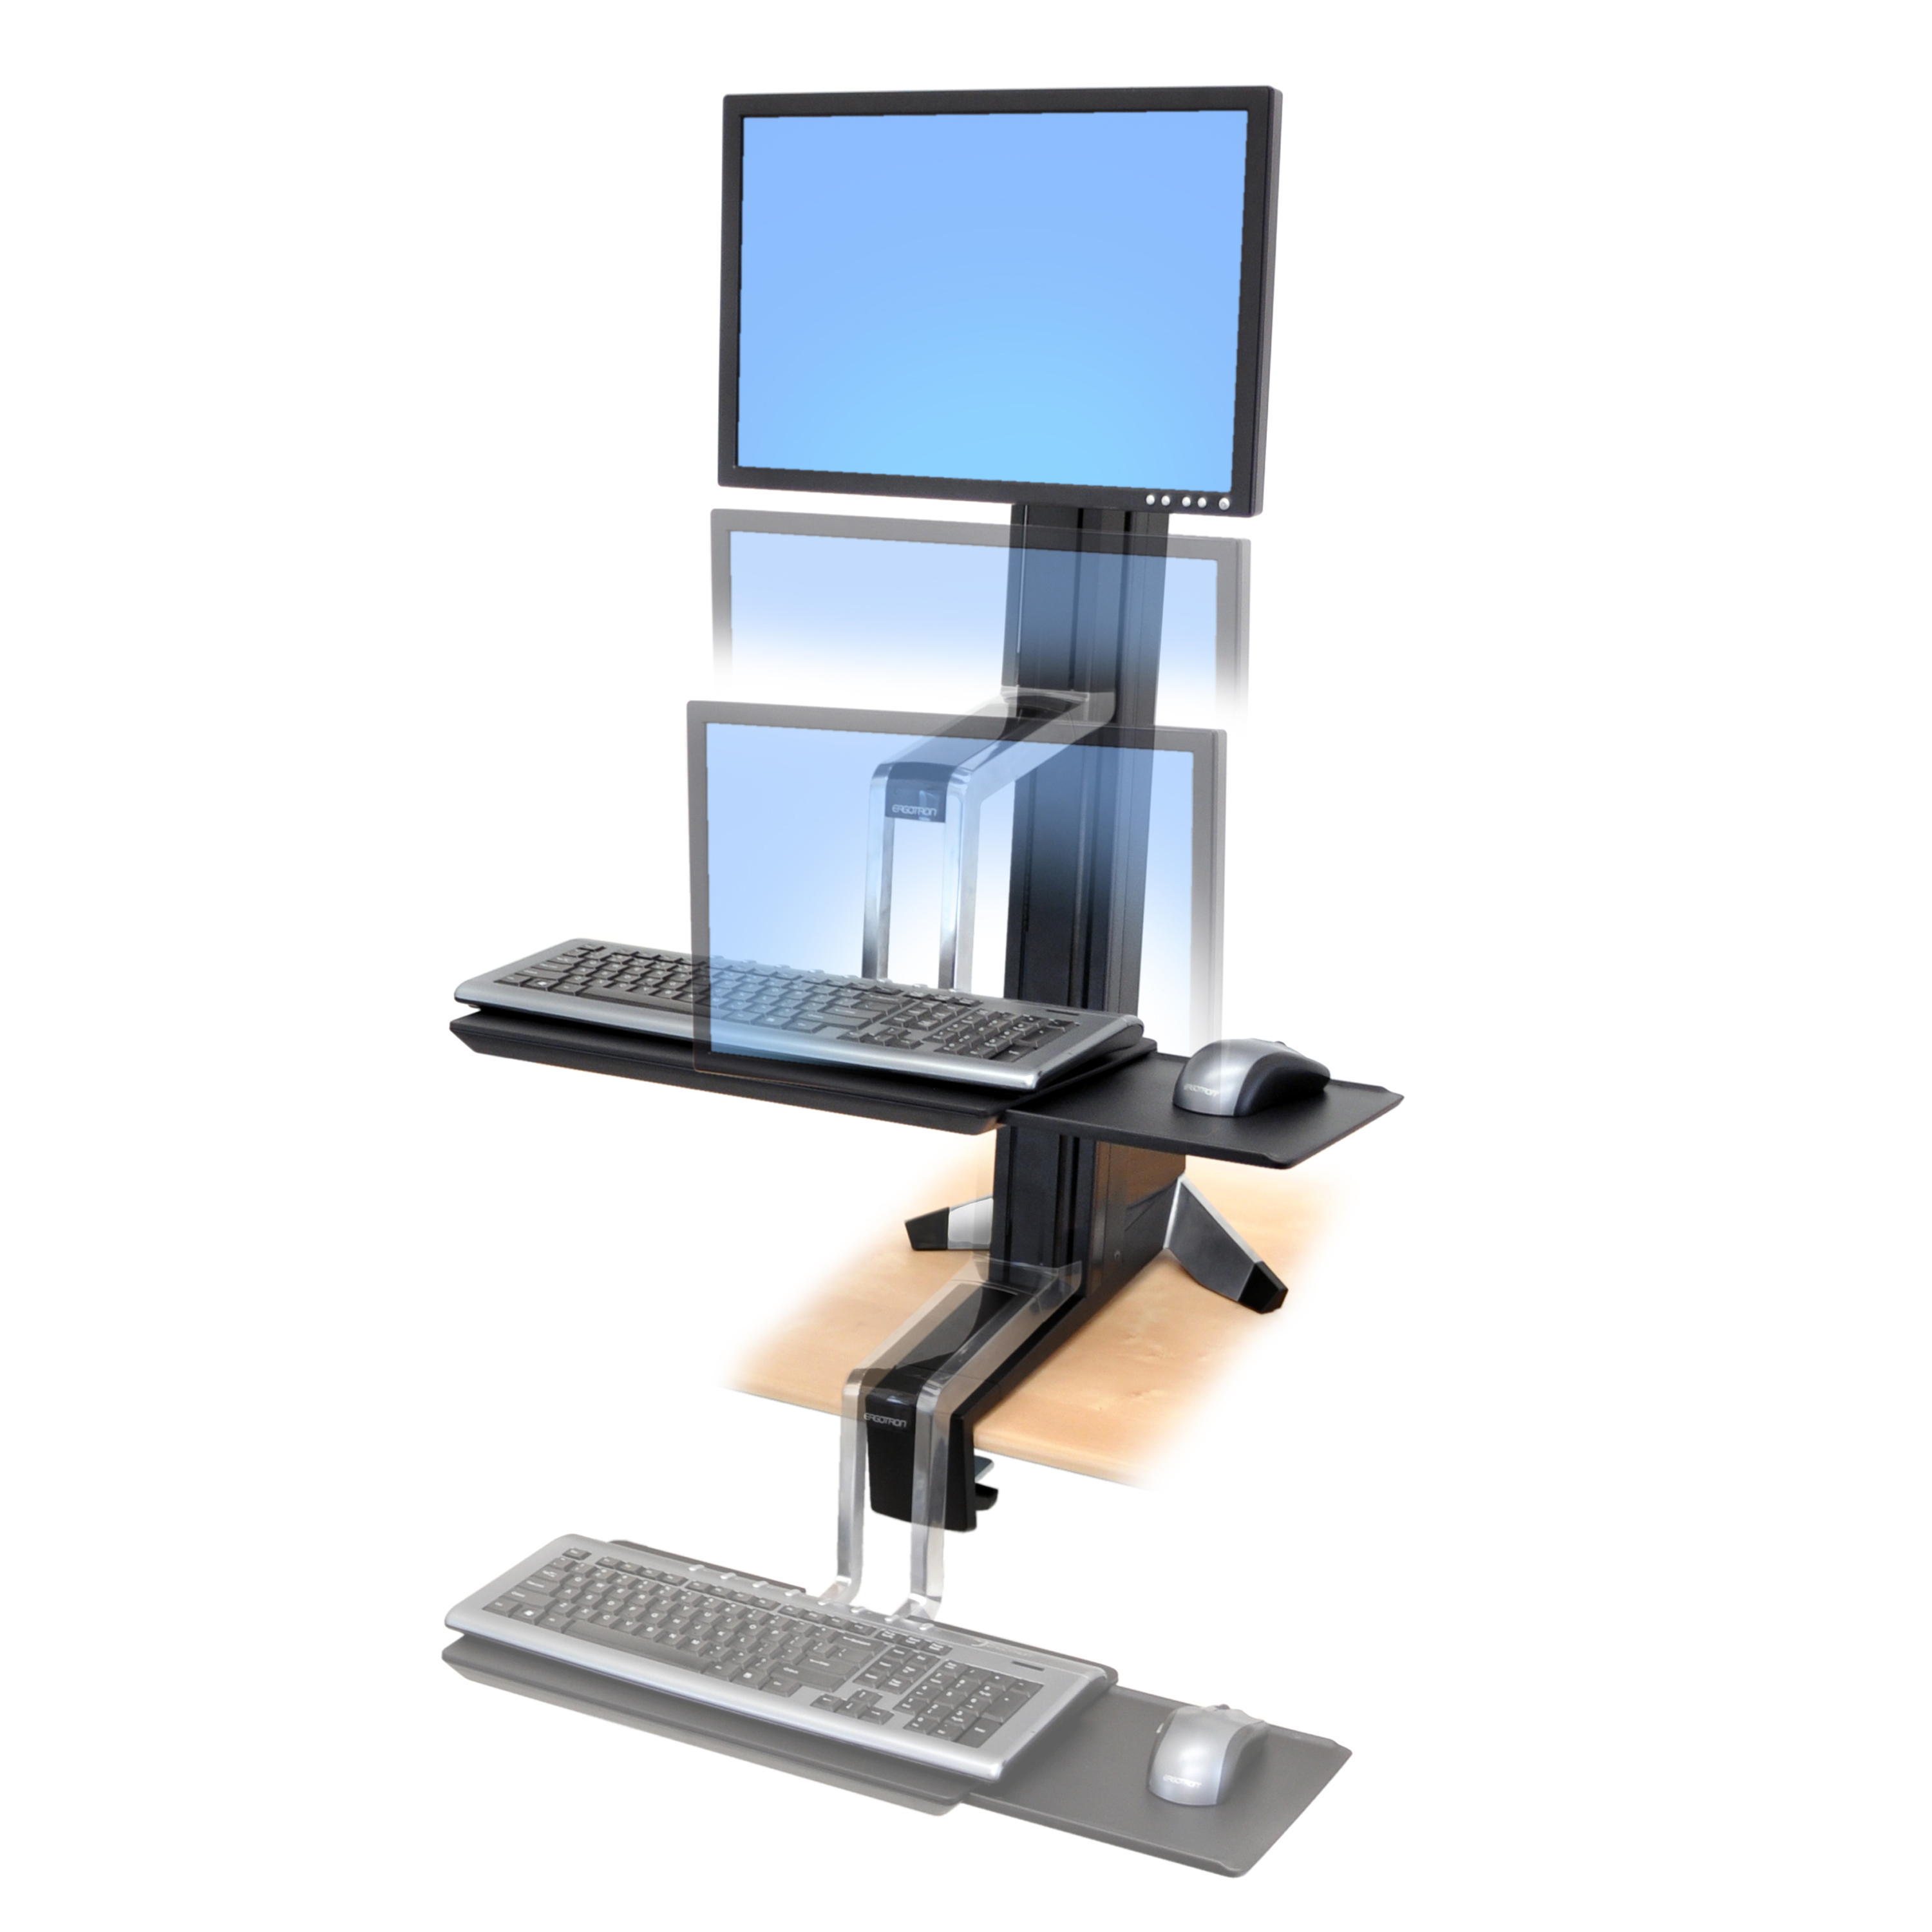 Ergotron WorkFit Single LD Monitor Kit Stand